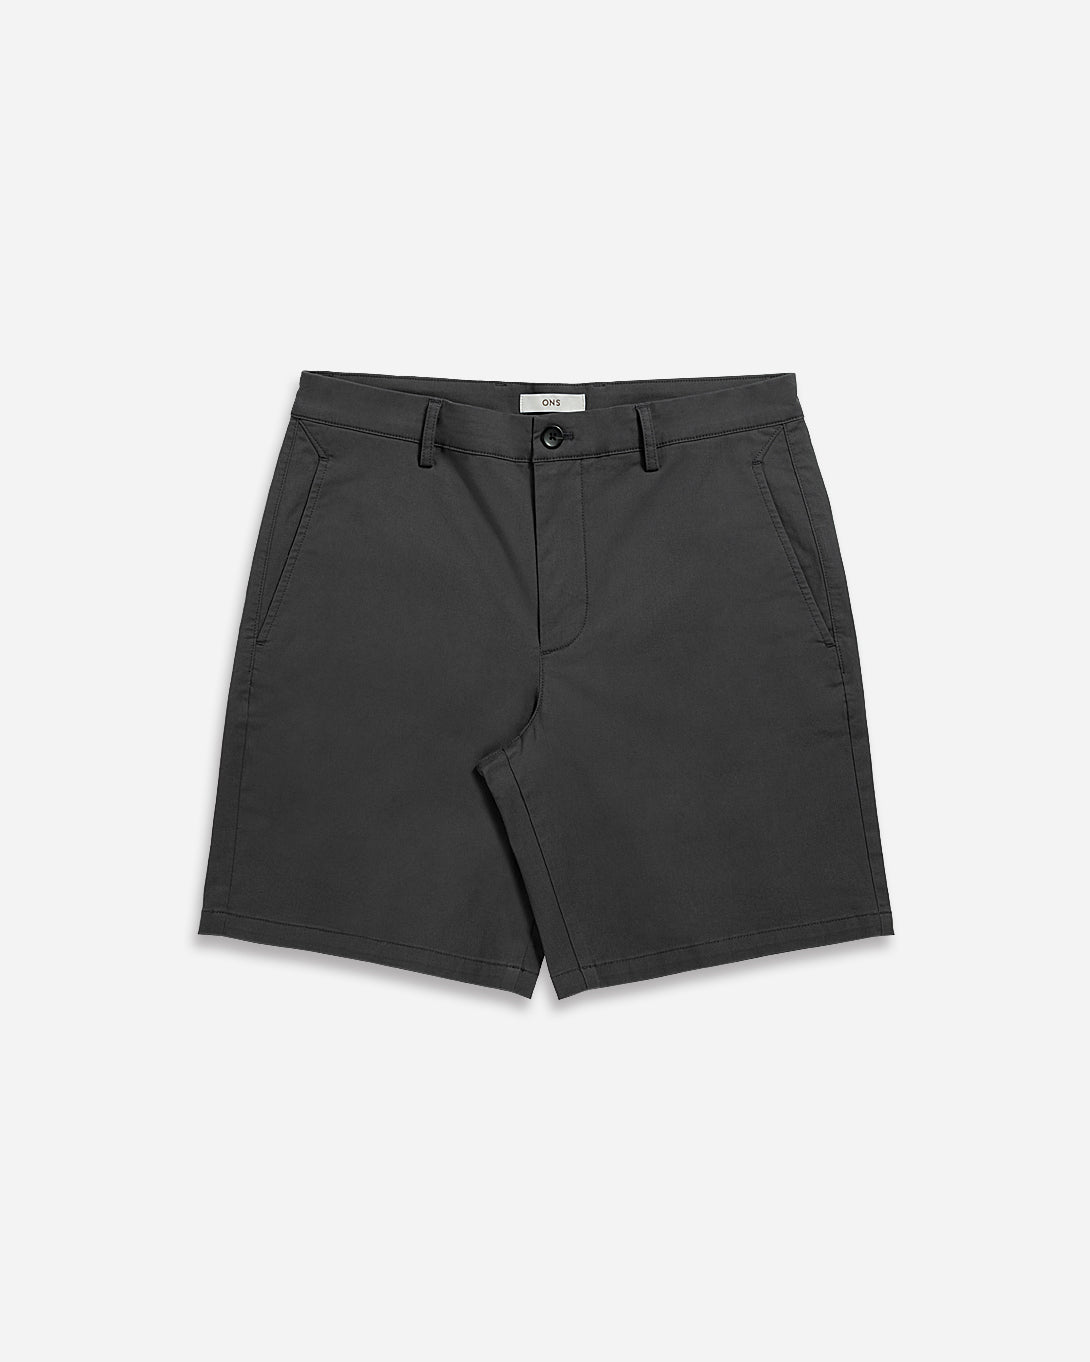 Charcoal Jackson Stretch Shorts Mens Casual Short